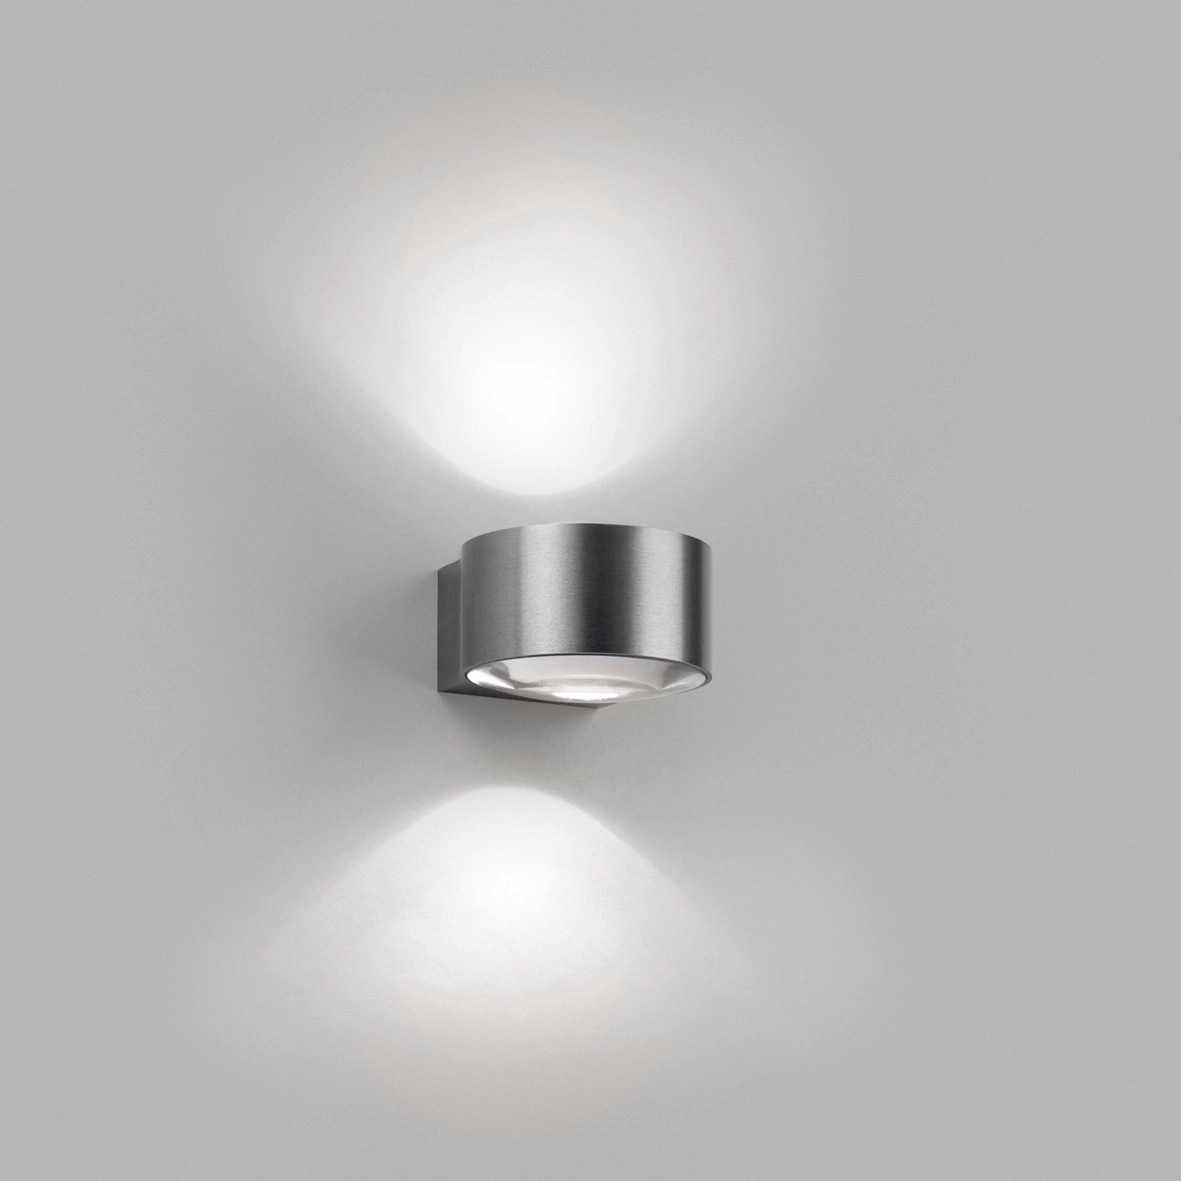 Orbit mini LED Wandlampe von Light Point